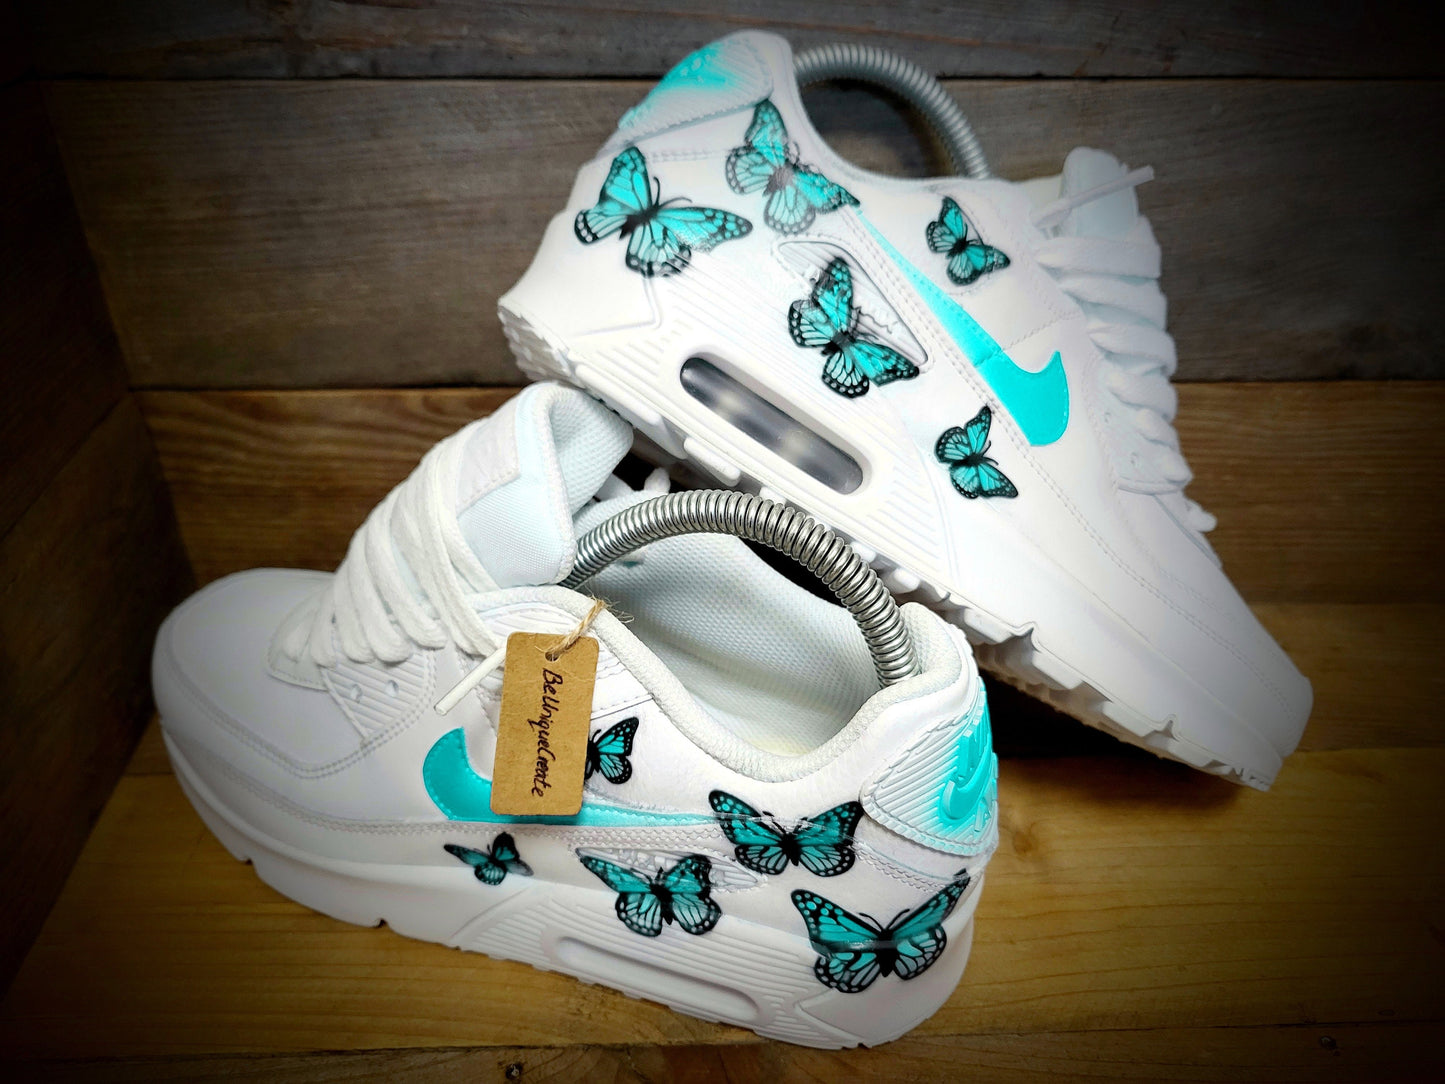 Custom Painted Air Max 90/Sneakers/Shoes/Kicks/Premium/Personalised/Aqua Butterfly